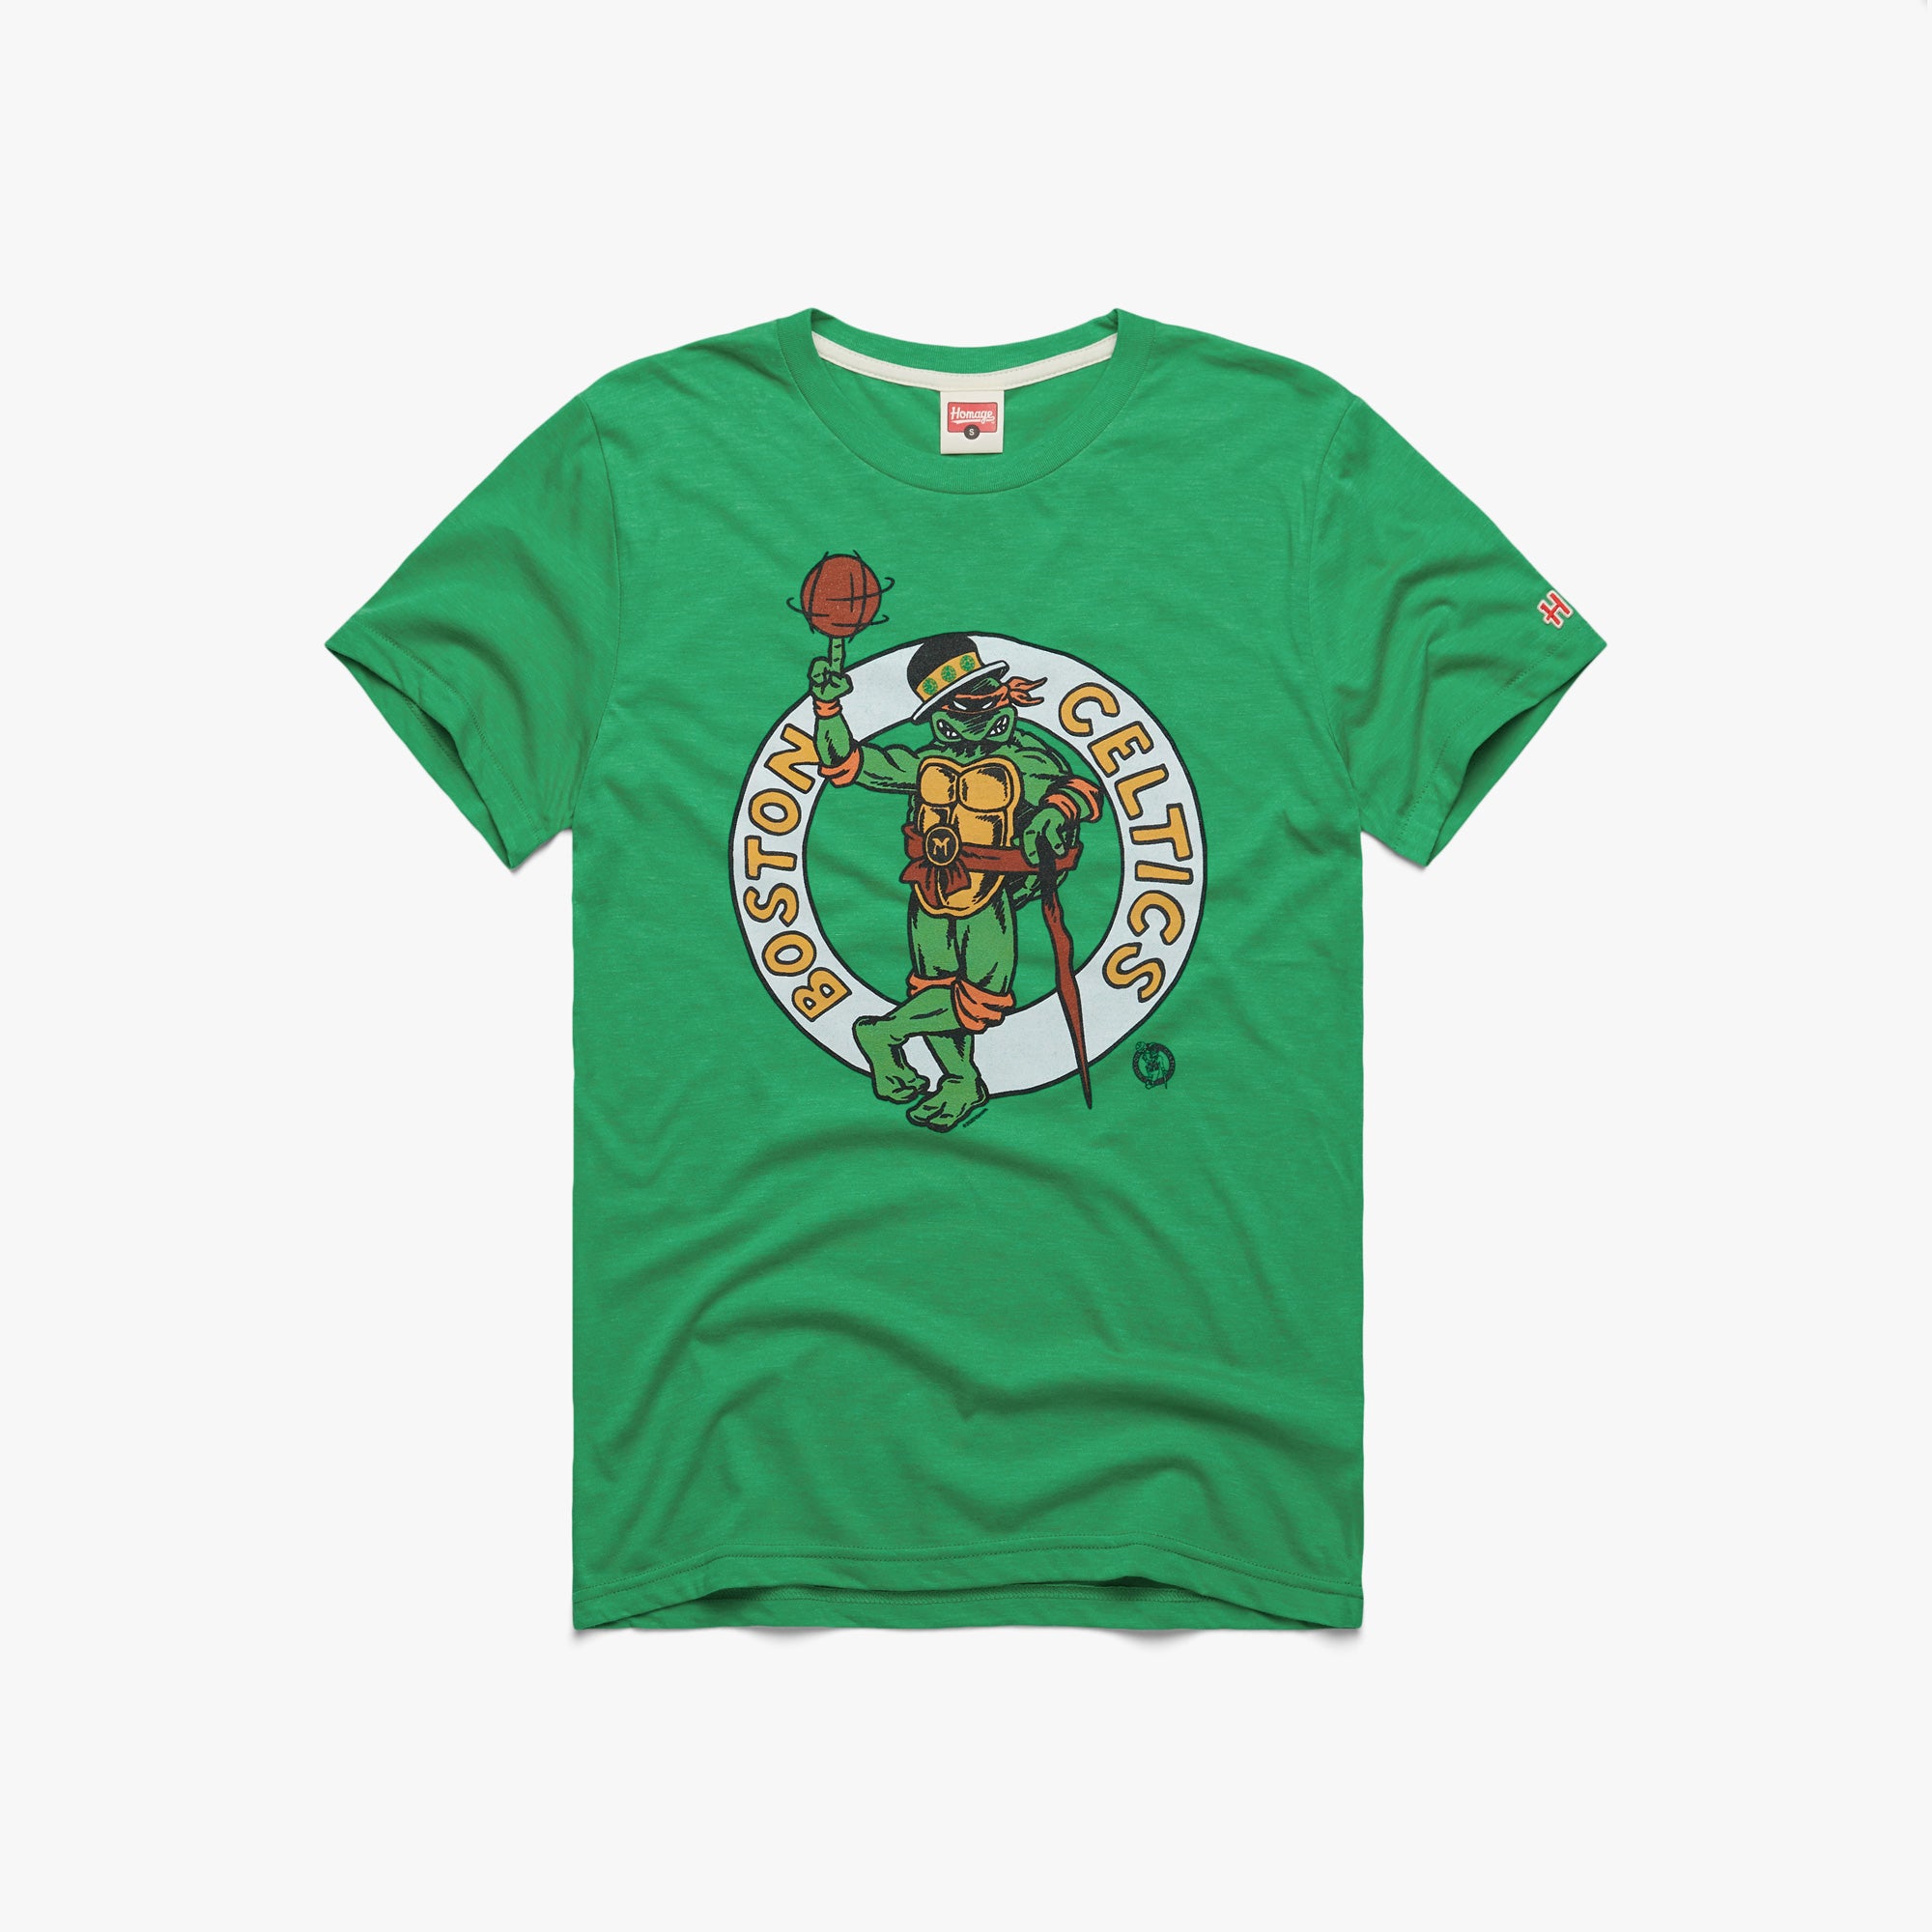 celtics shirts